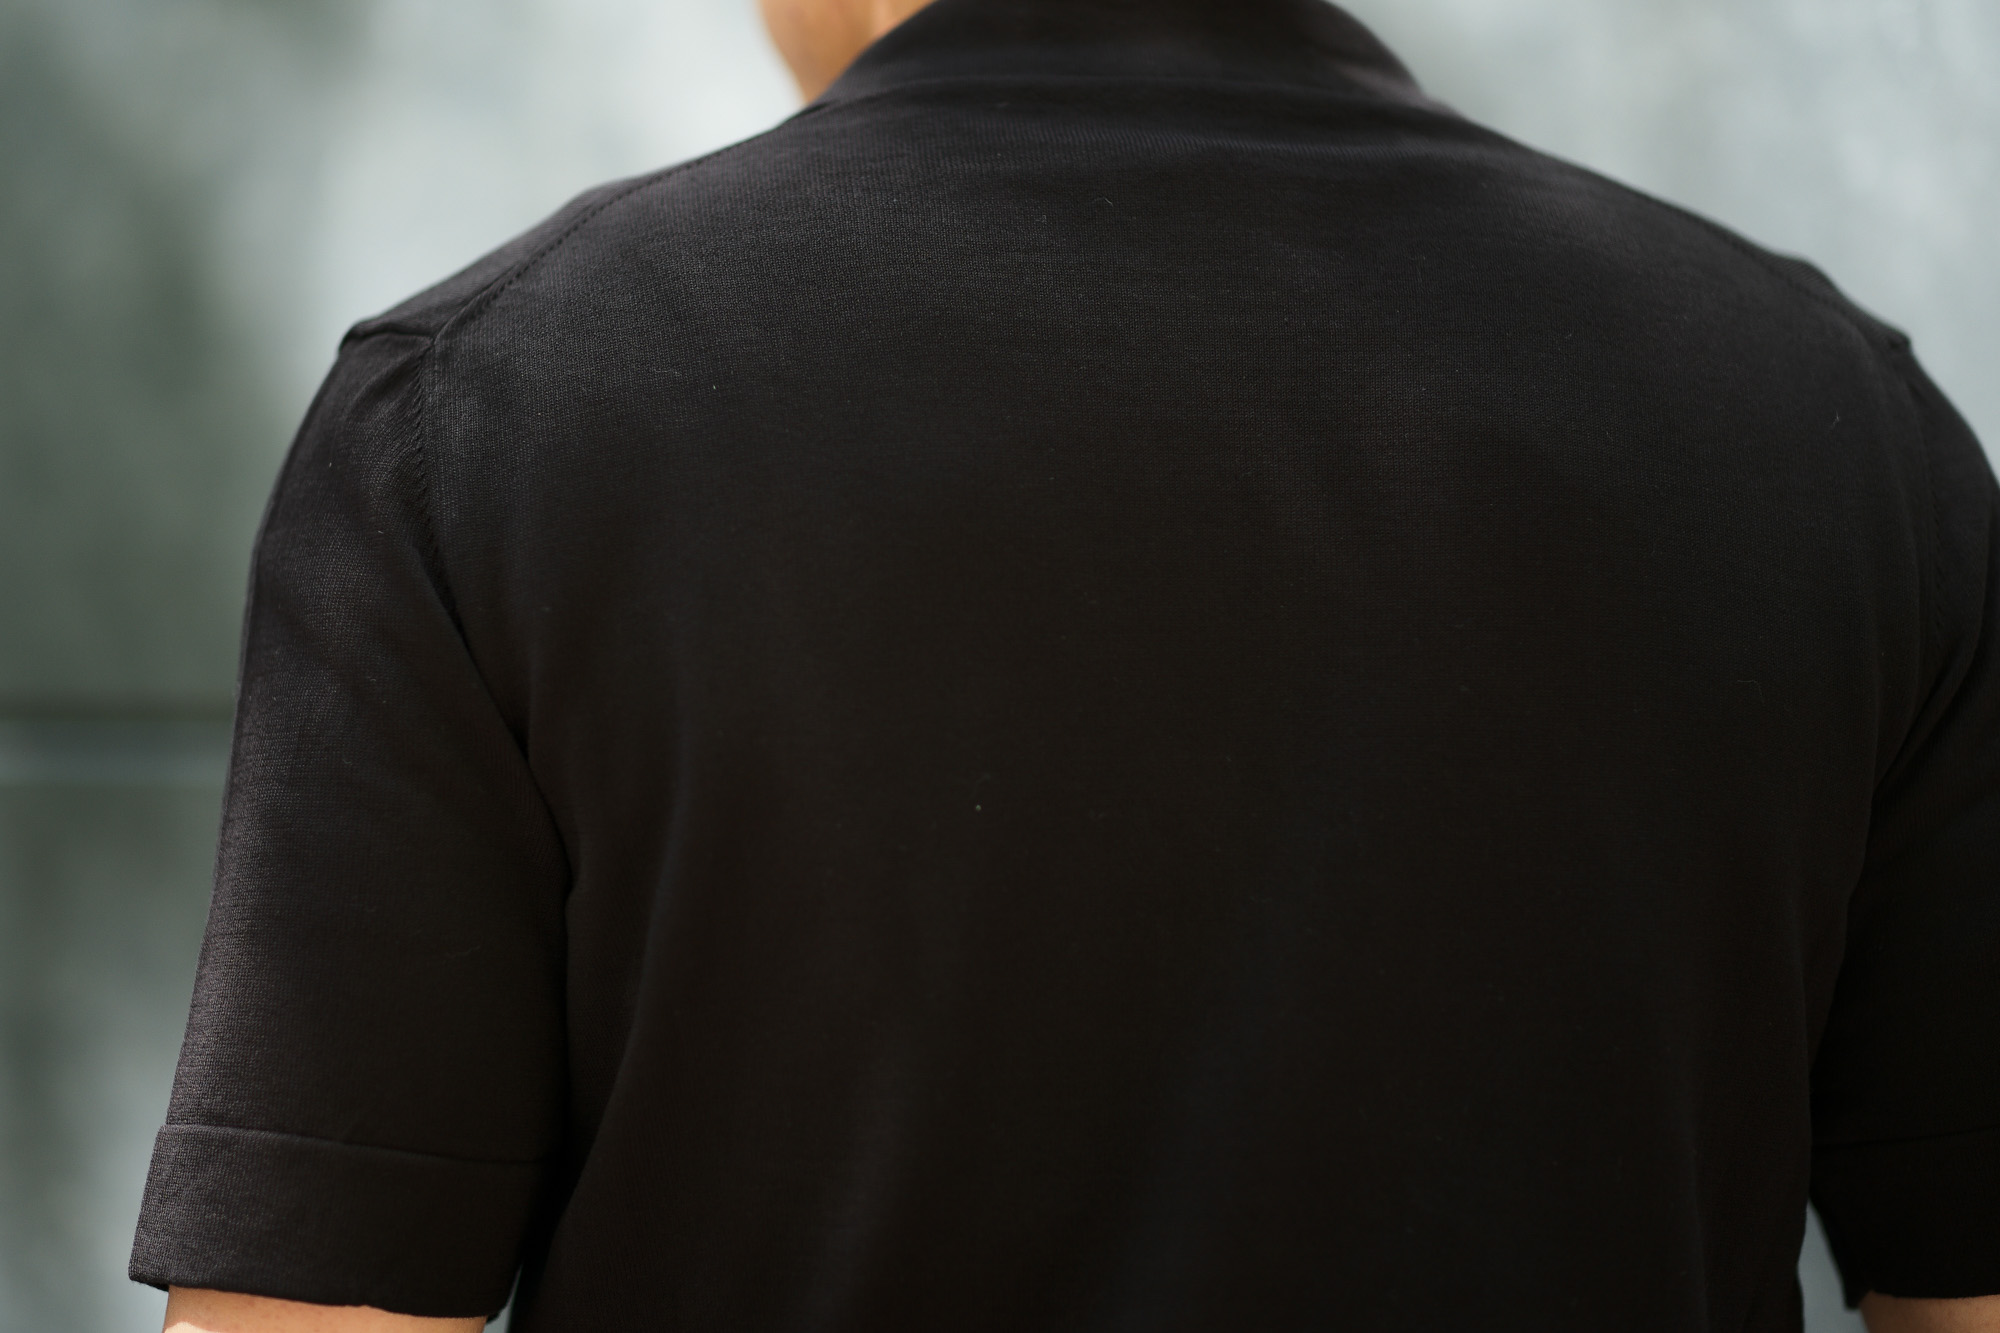 LARDINI (ラルディーニ) Milano Rib Knit Shirts (ミラノリブ ニット シャツ) コットン ミラノリブ オープンカラー ニット シャツ BLACK (ブラック・999) Made in italy (イタリア製) 2019 春夏新作 愛知 名古屋 altoediritto アルトエデリット